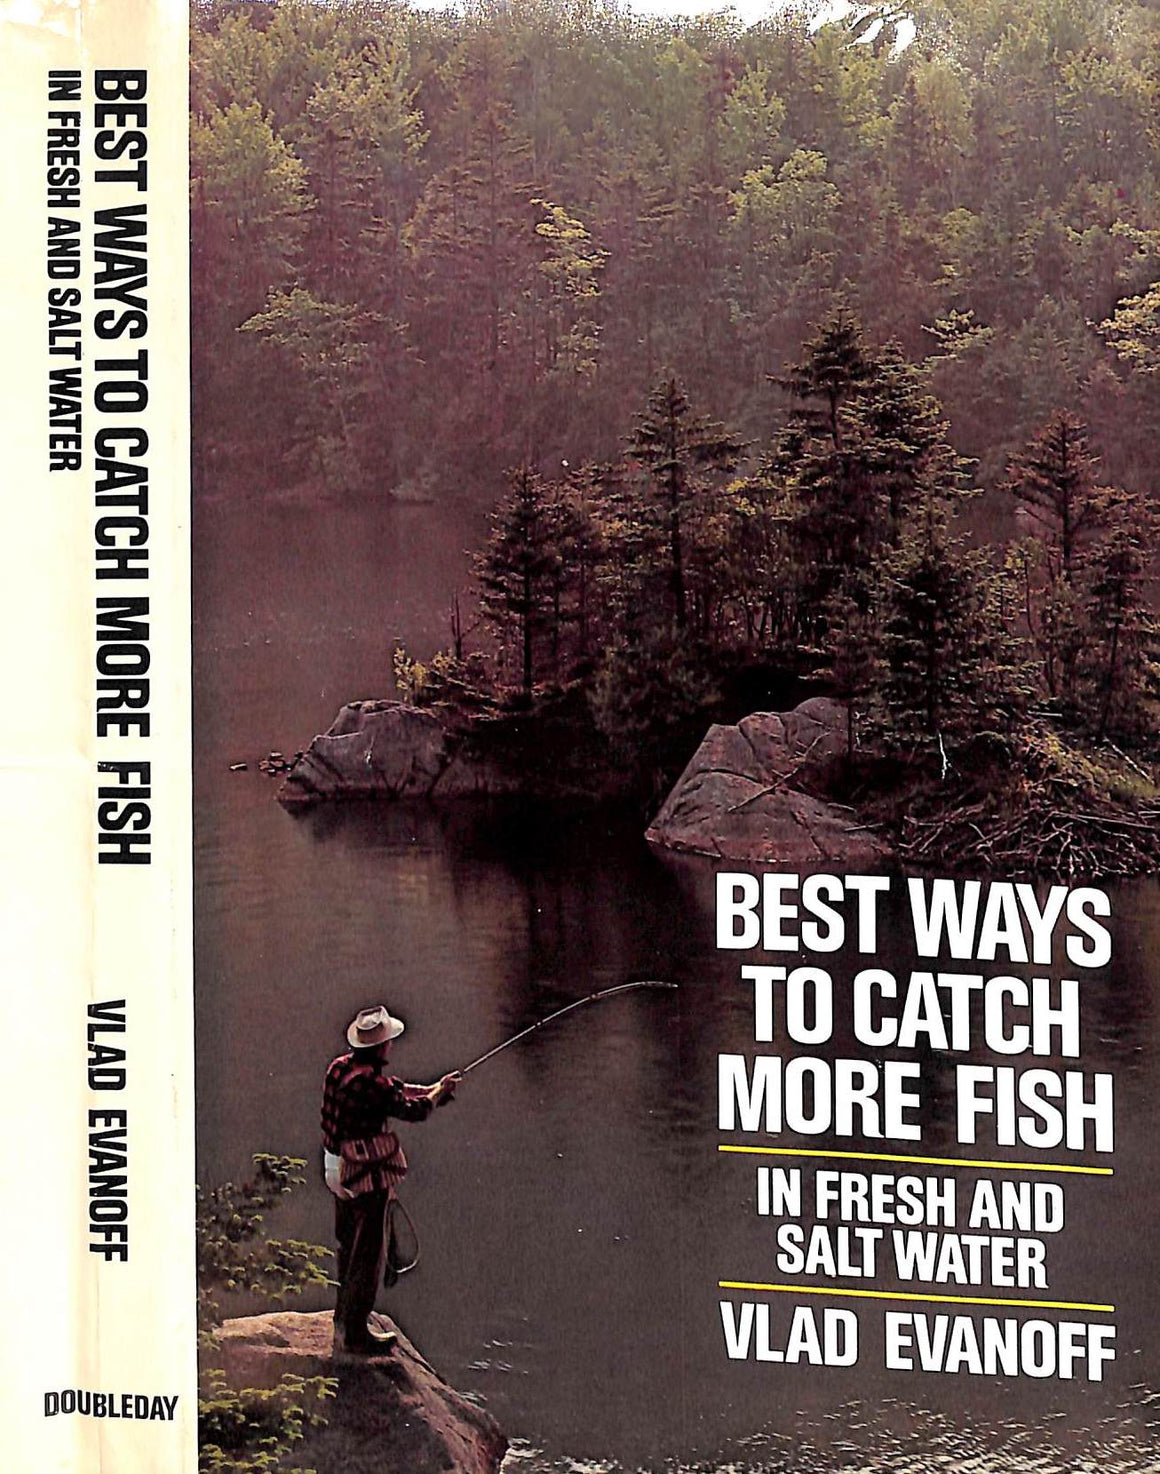 "Best Ways To Catch More Fish In Fresh And Salt Water" 1975 EVANOFF, Vlad